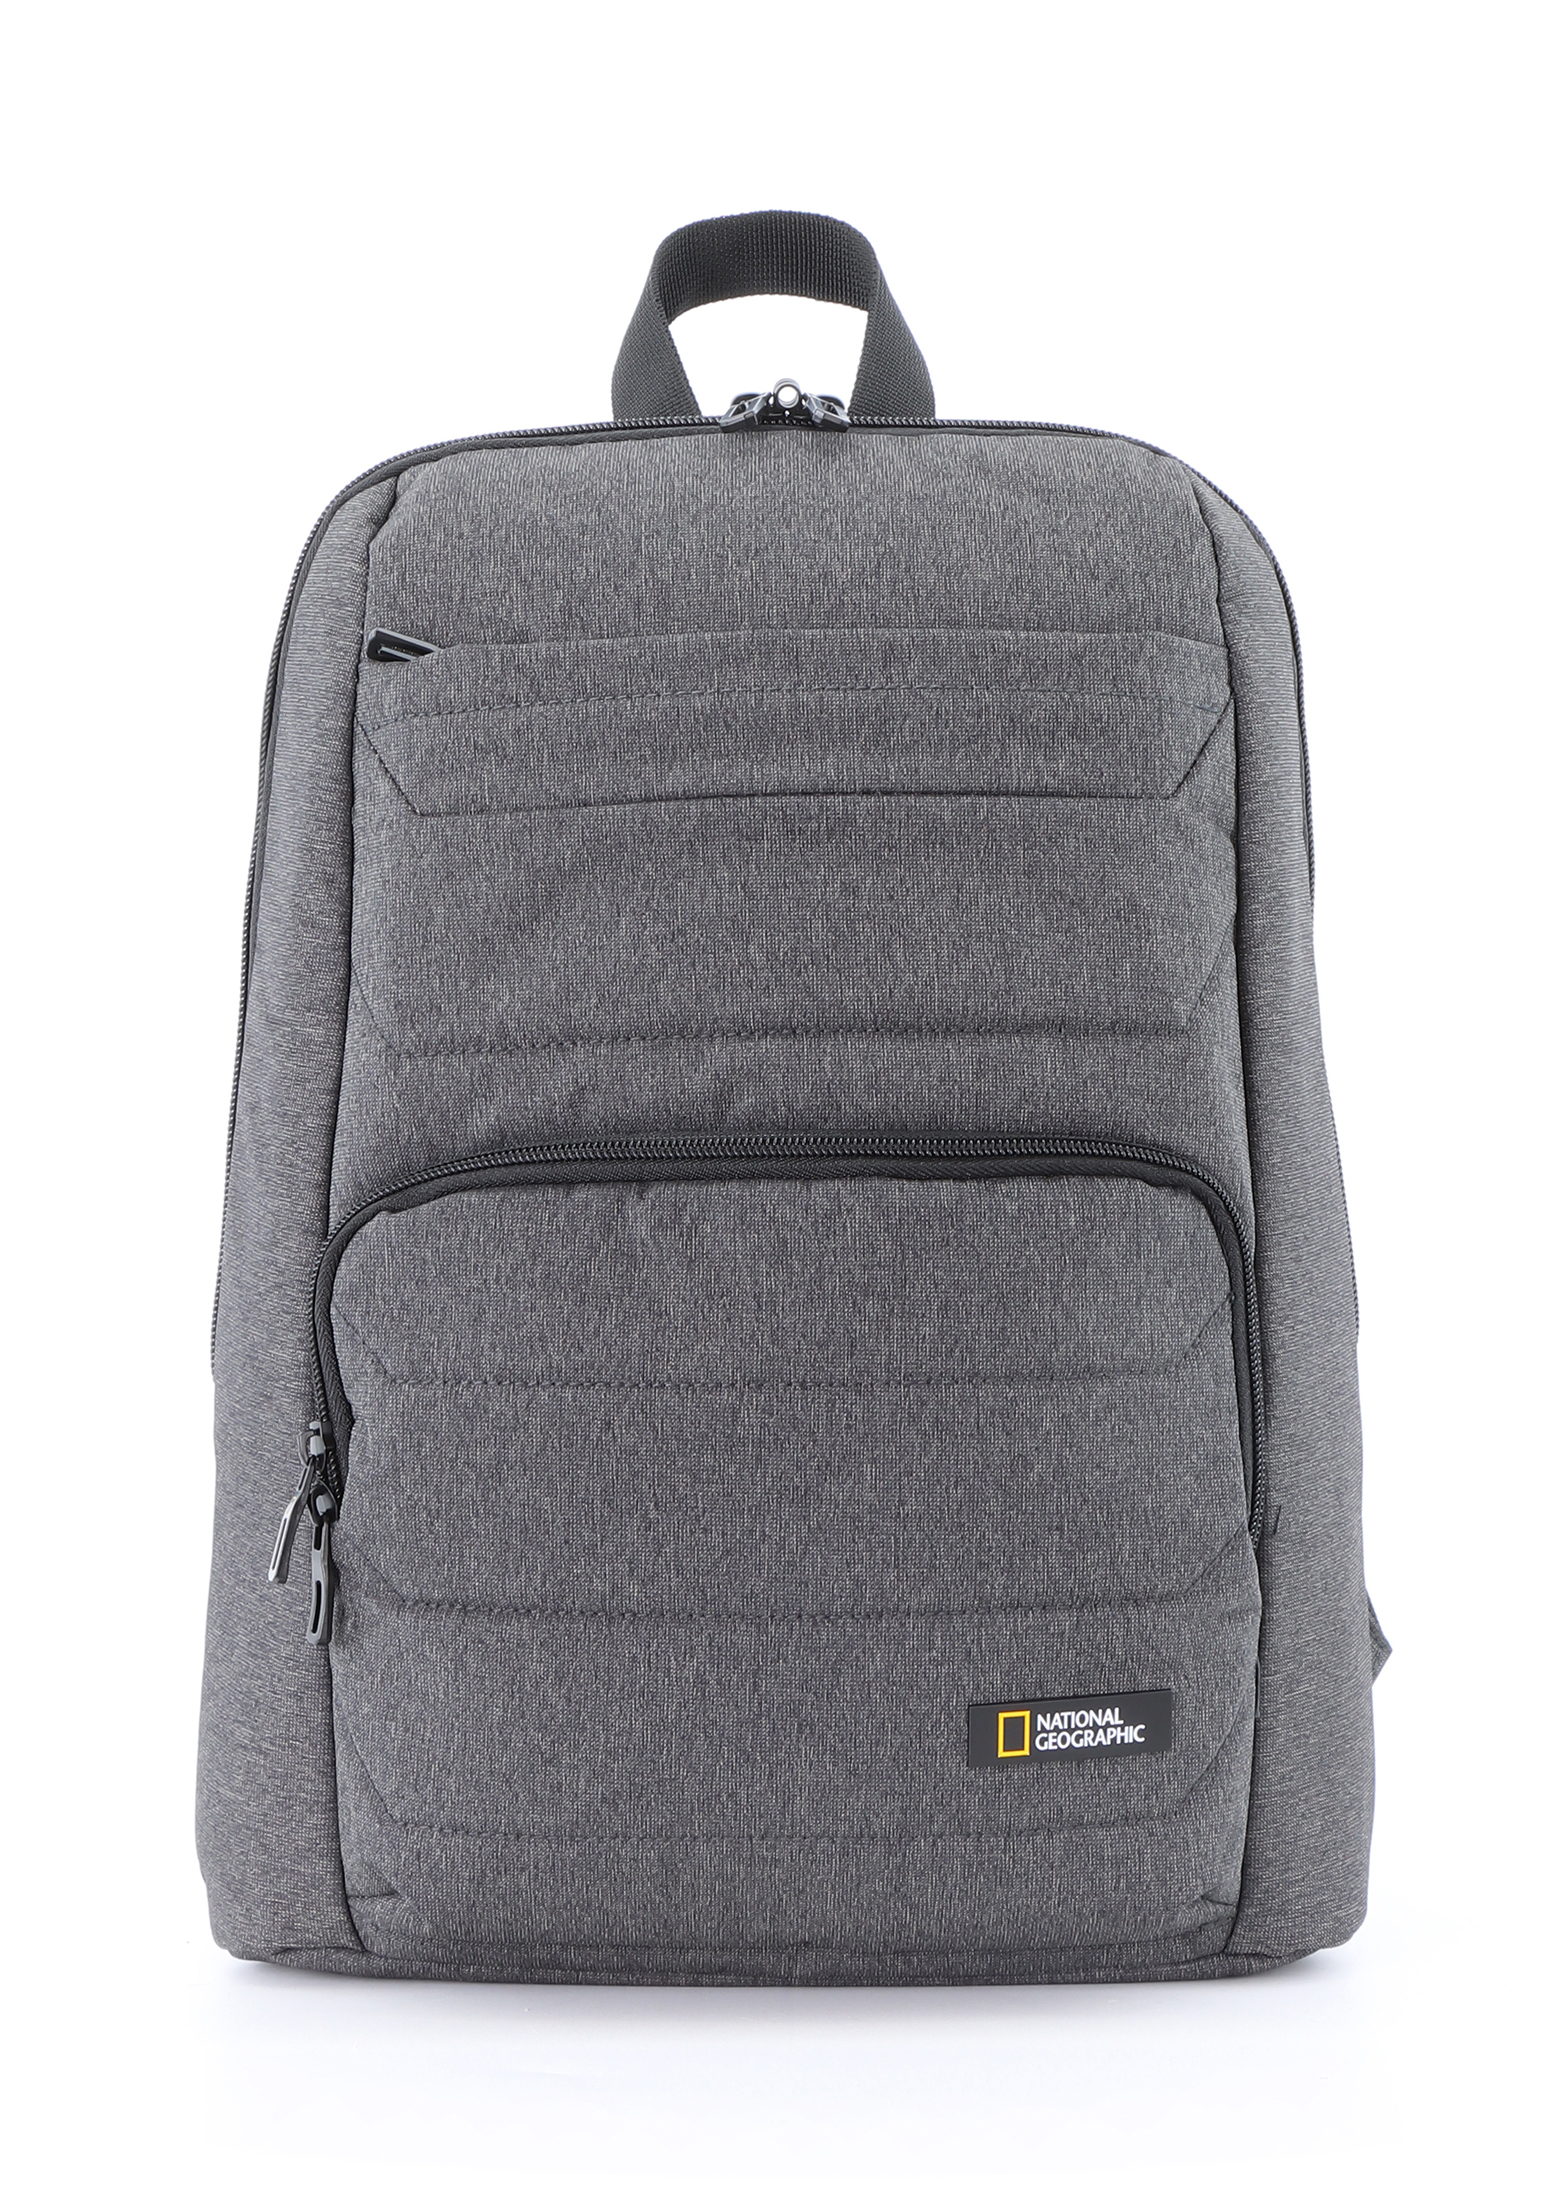 Рюкзак National Geographic, серый